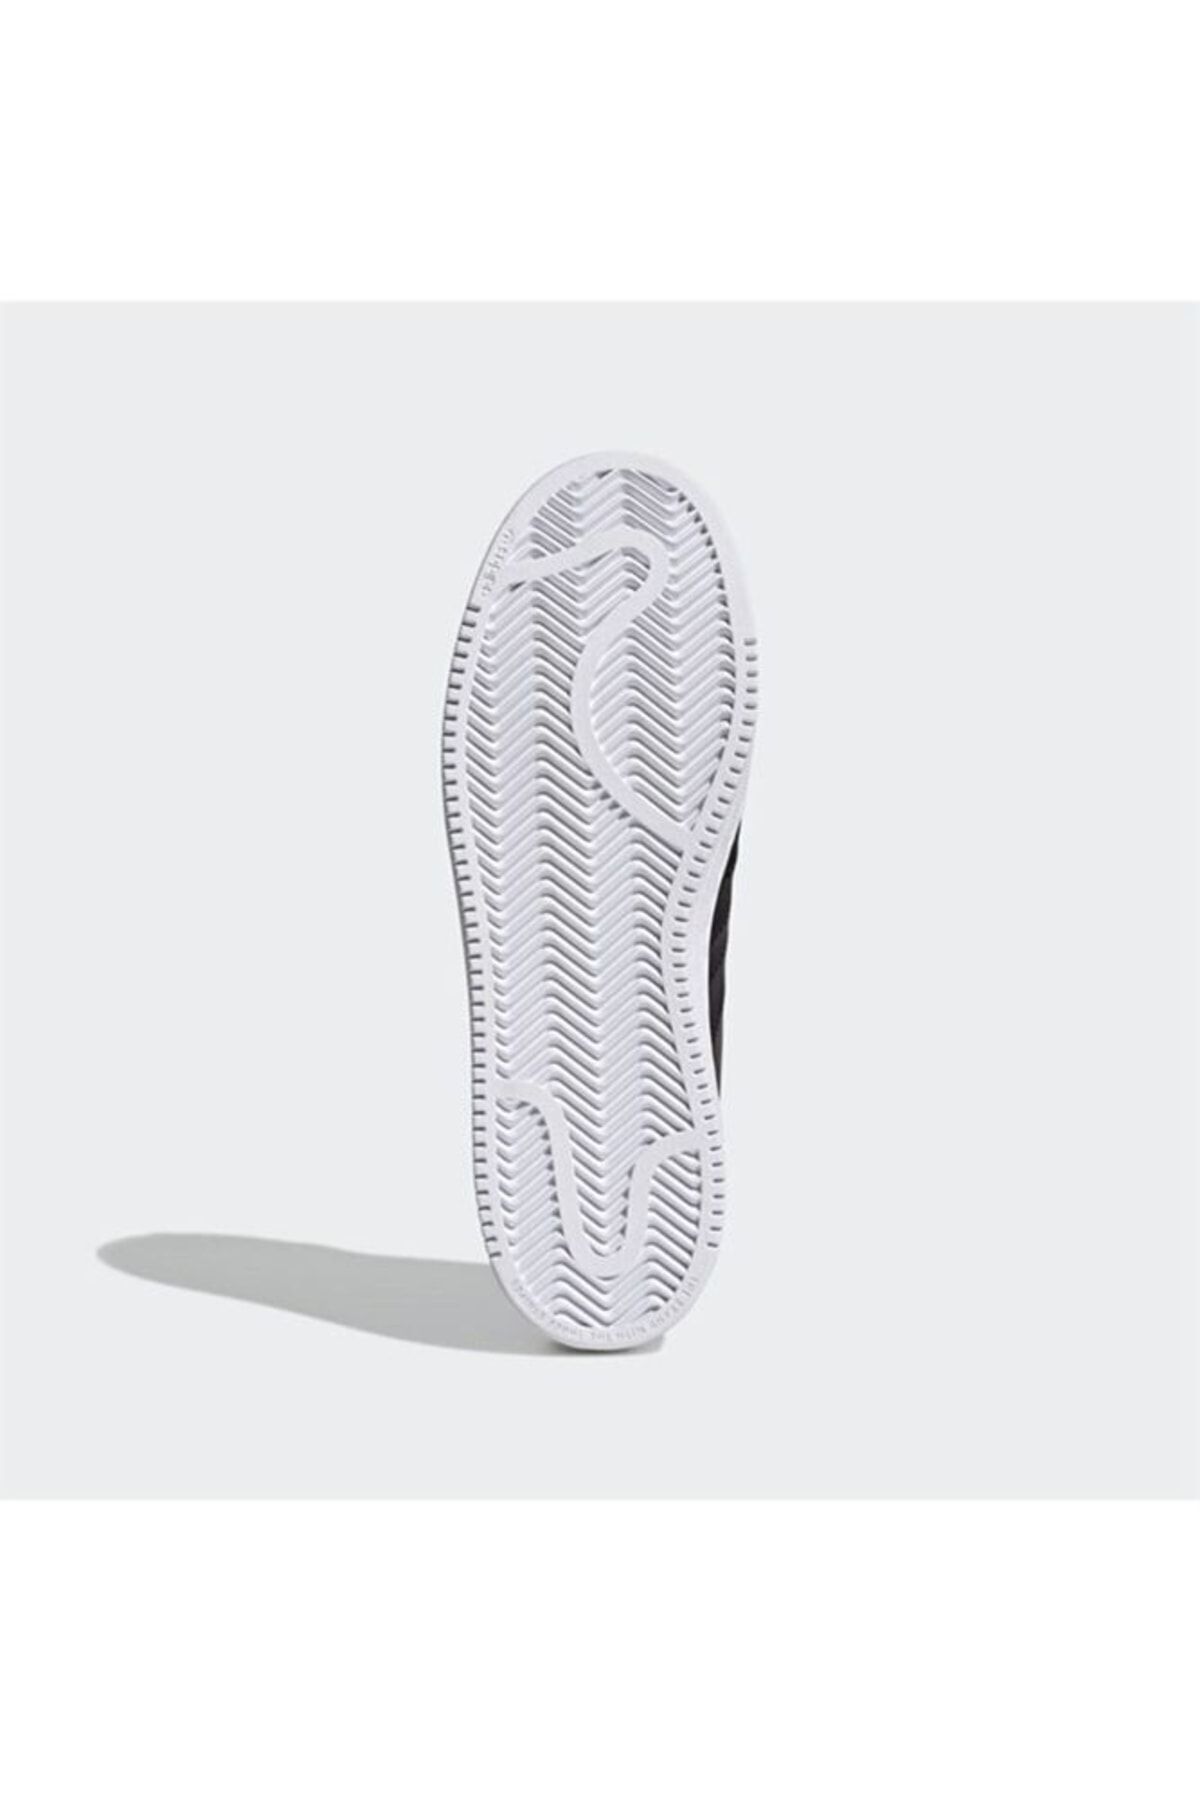 adidas کفش کتانی زنانه اسپرت مدل superstar ot tech